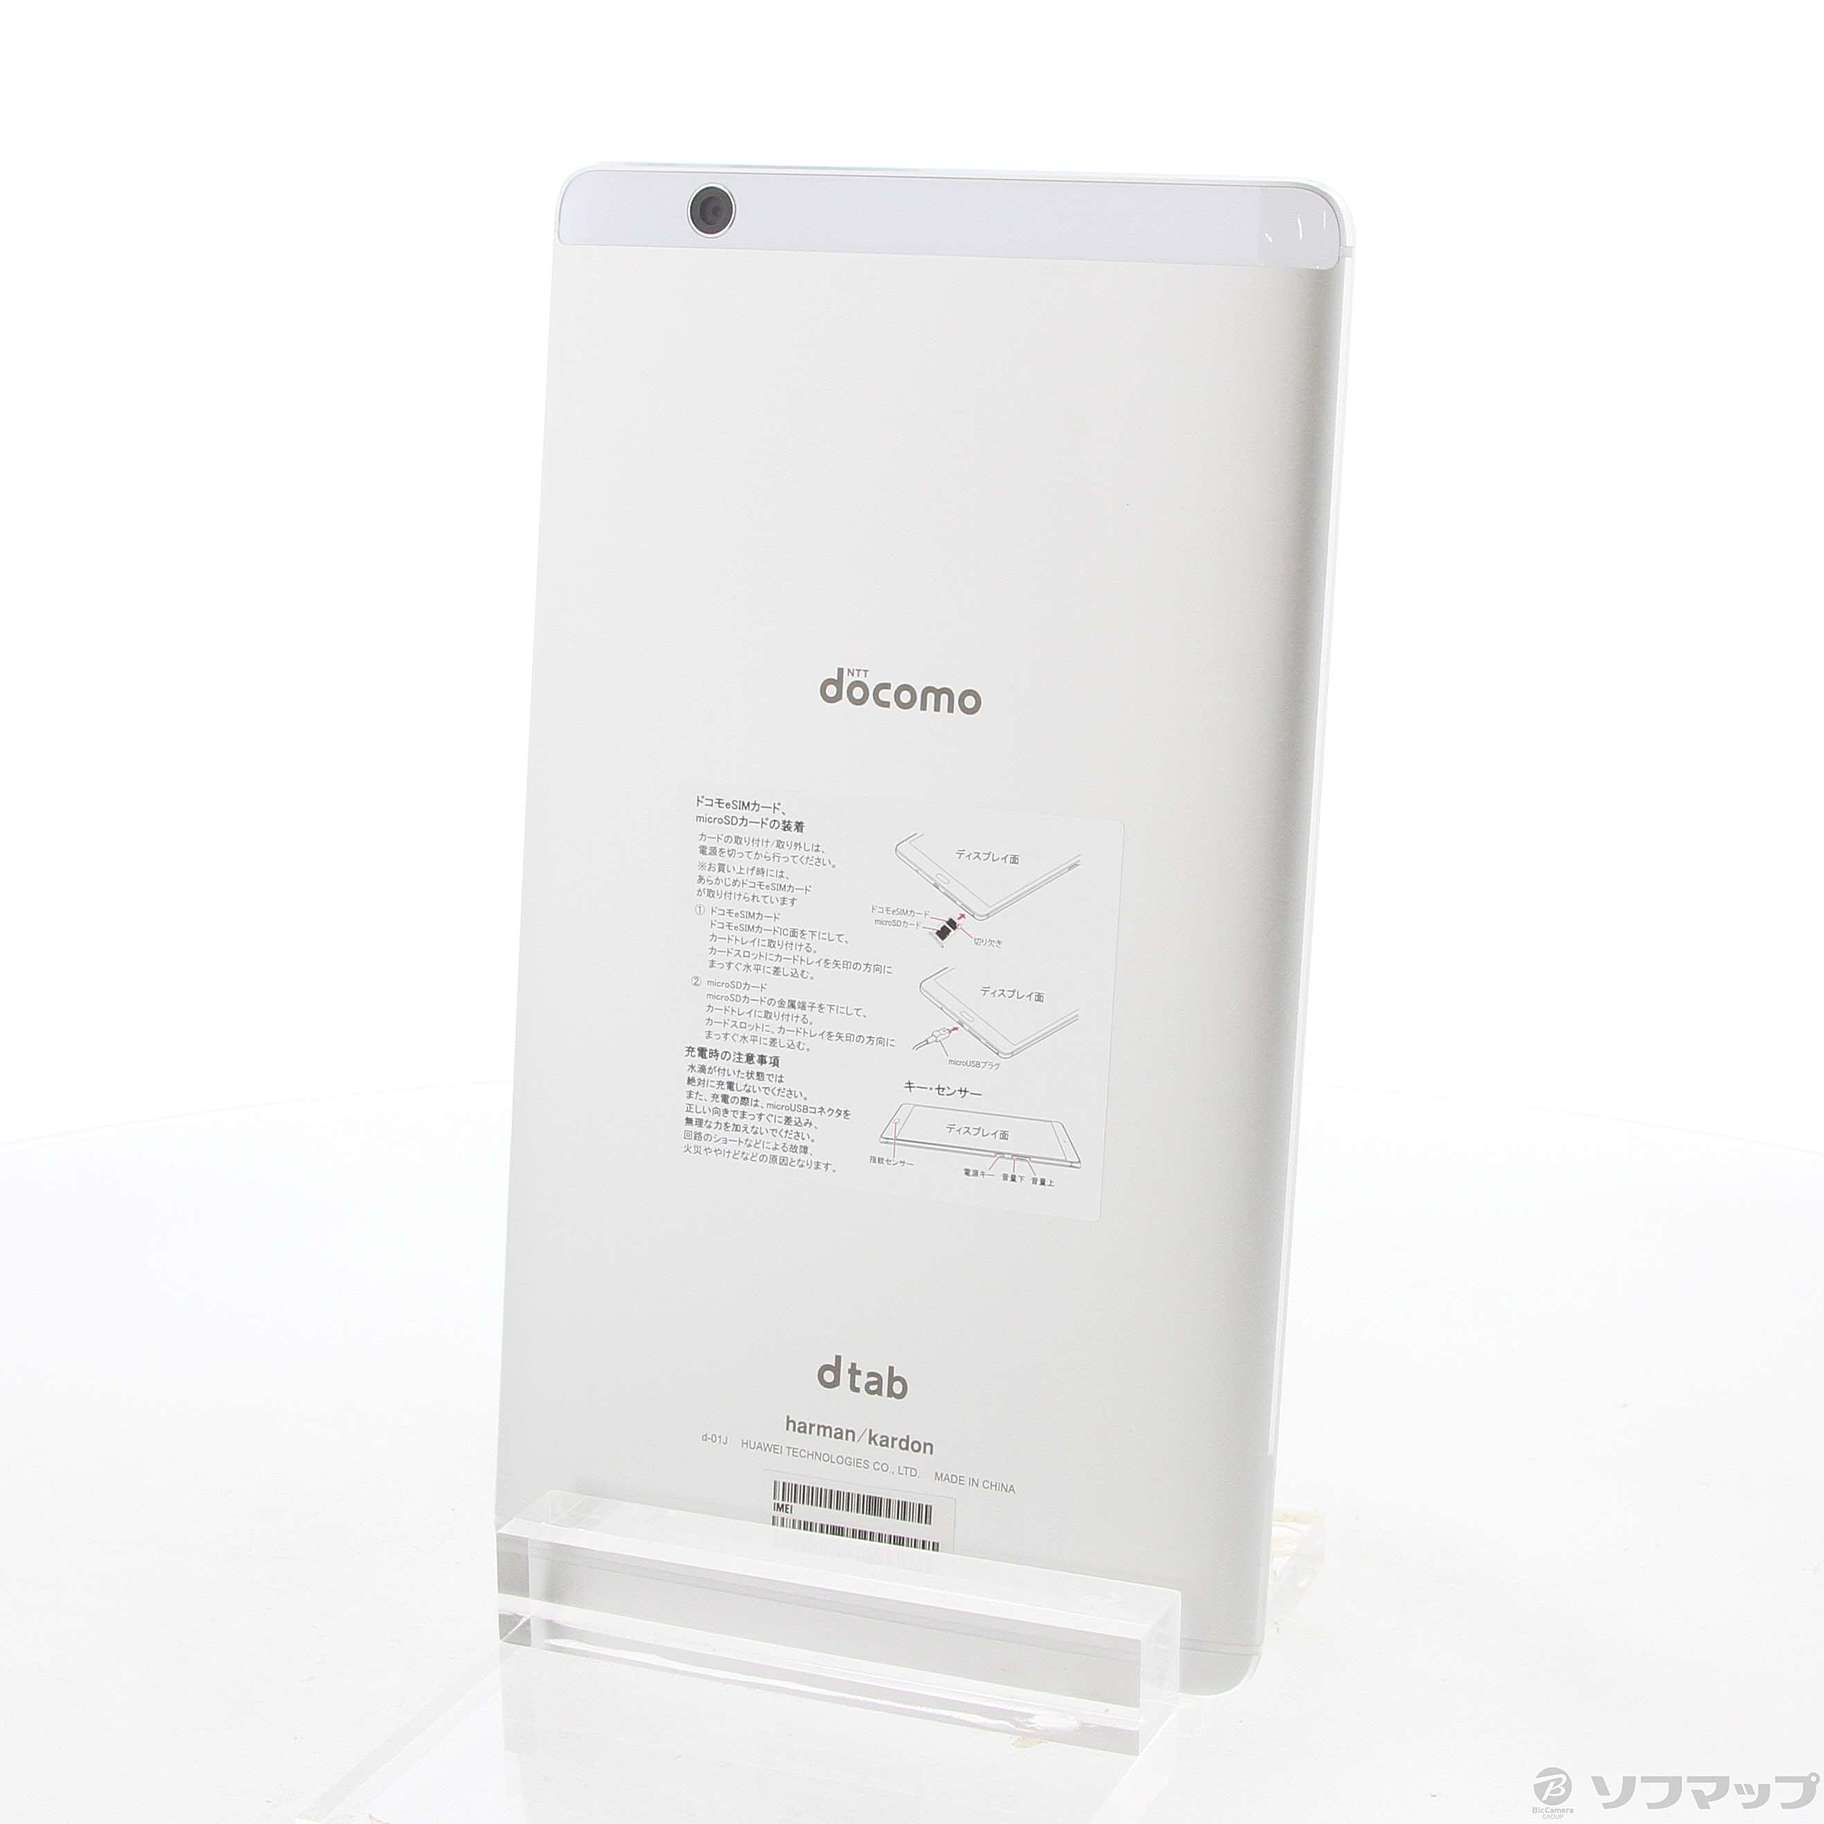 Huawei dtab Compact d-01J Silver